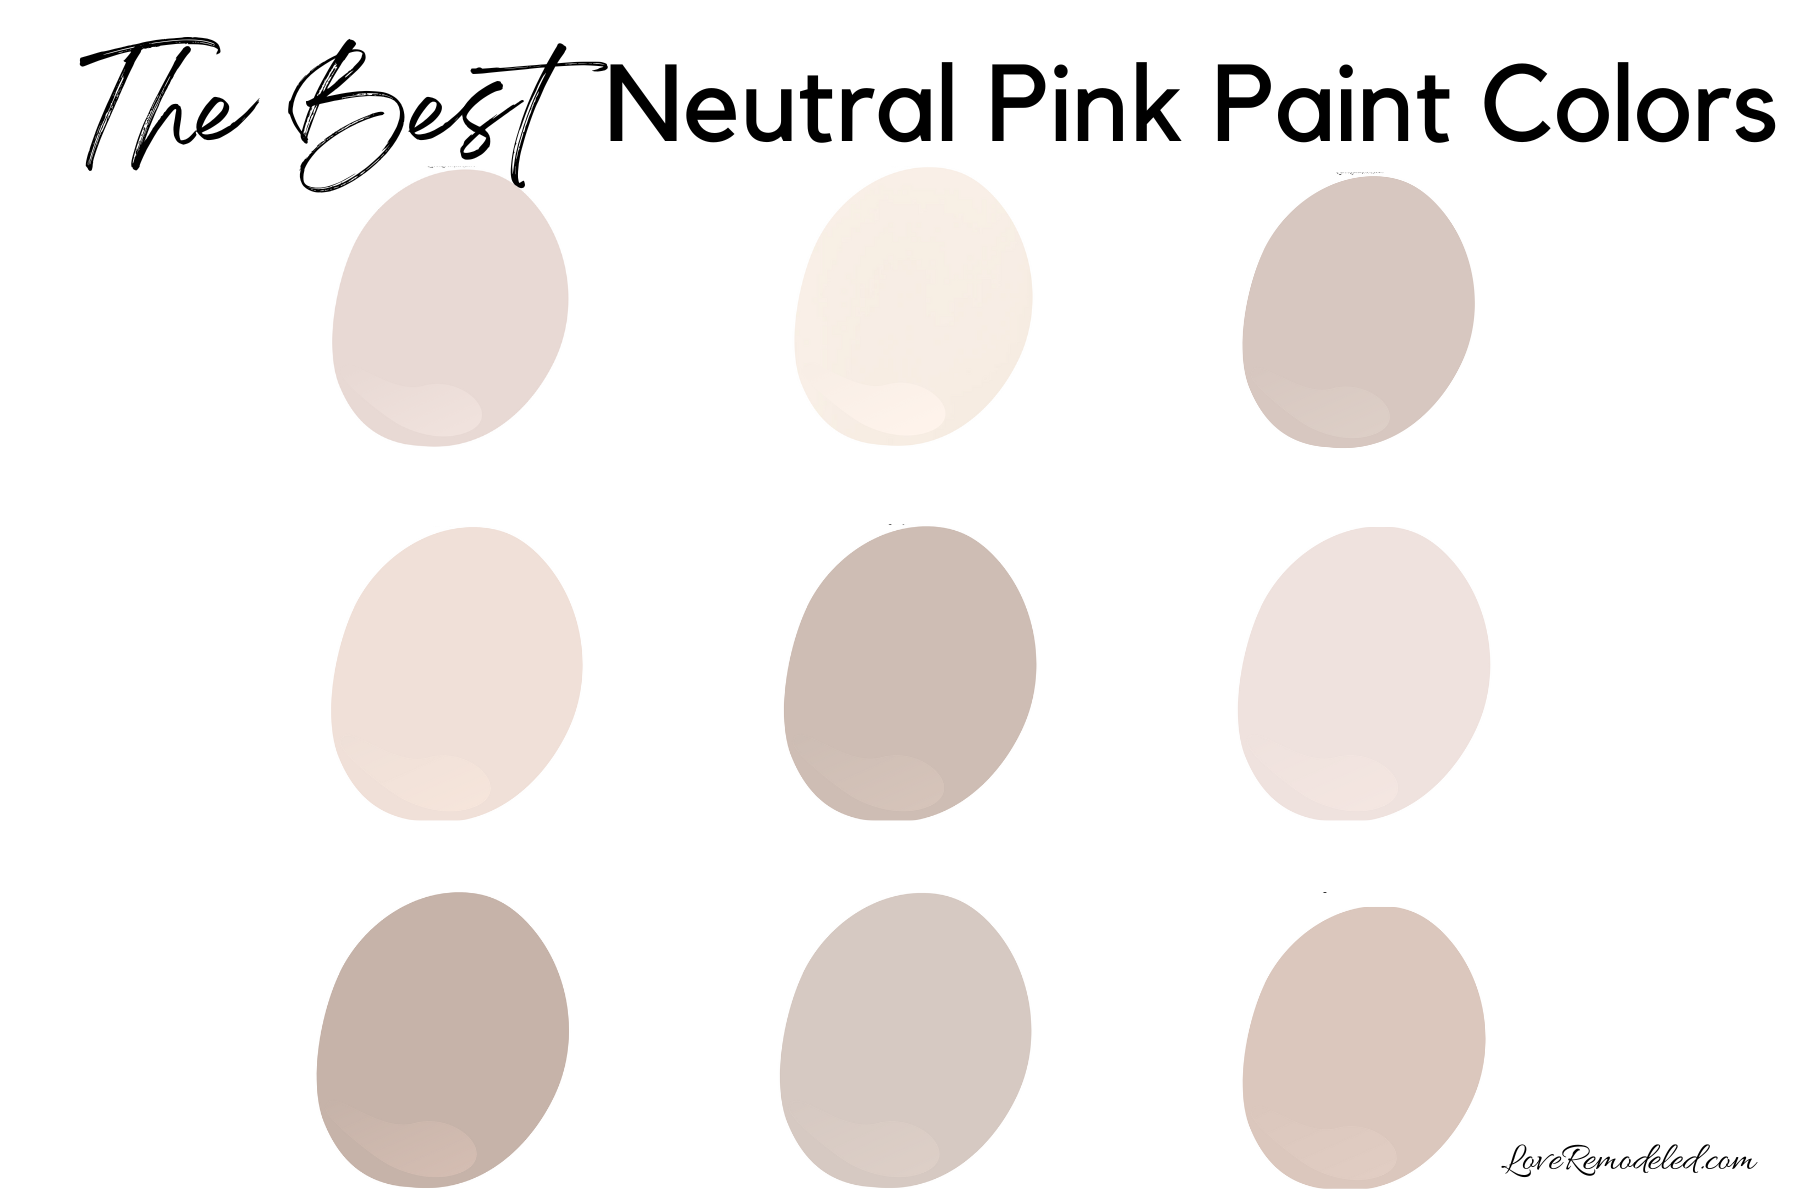 The Best Neutral Pink Paint Colors